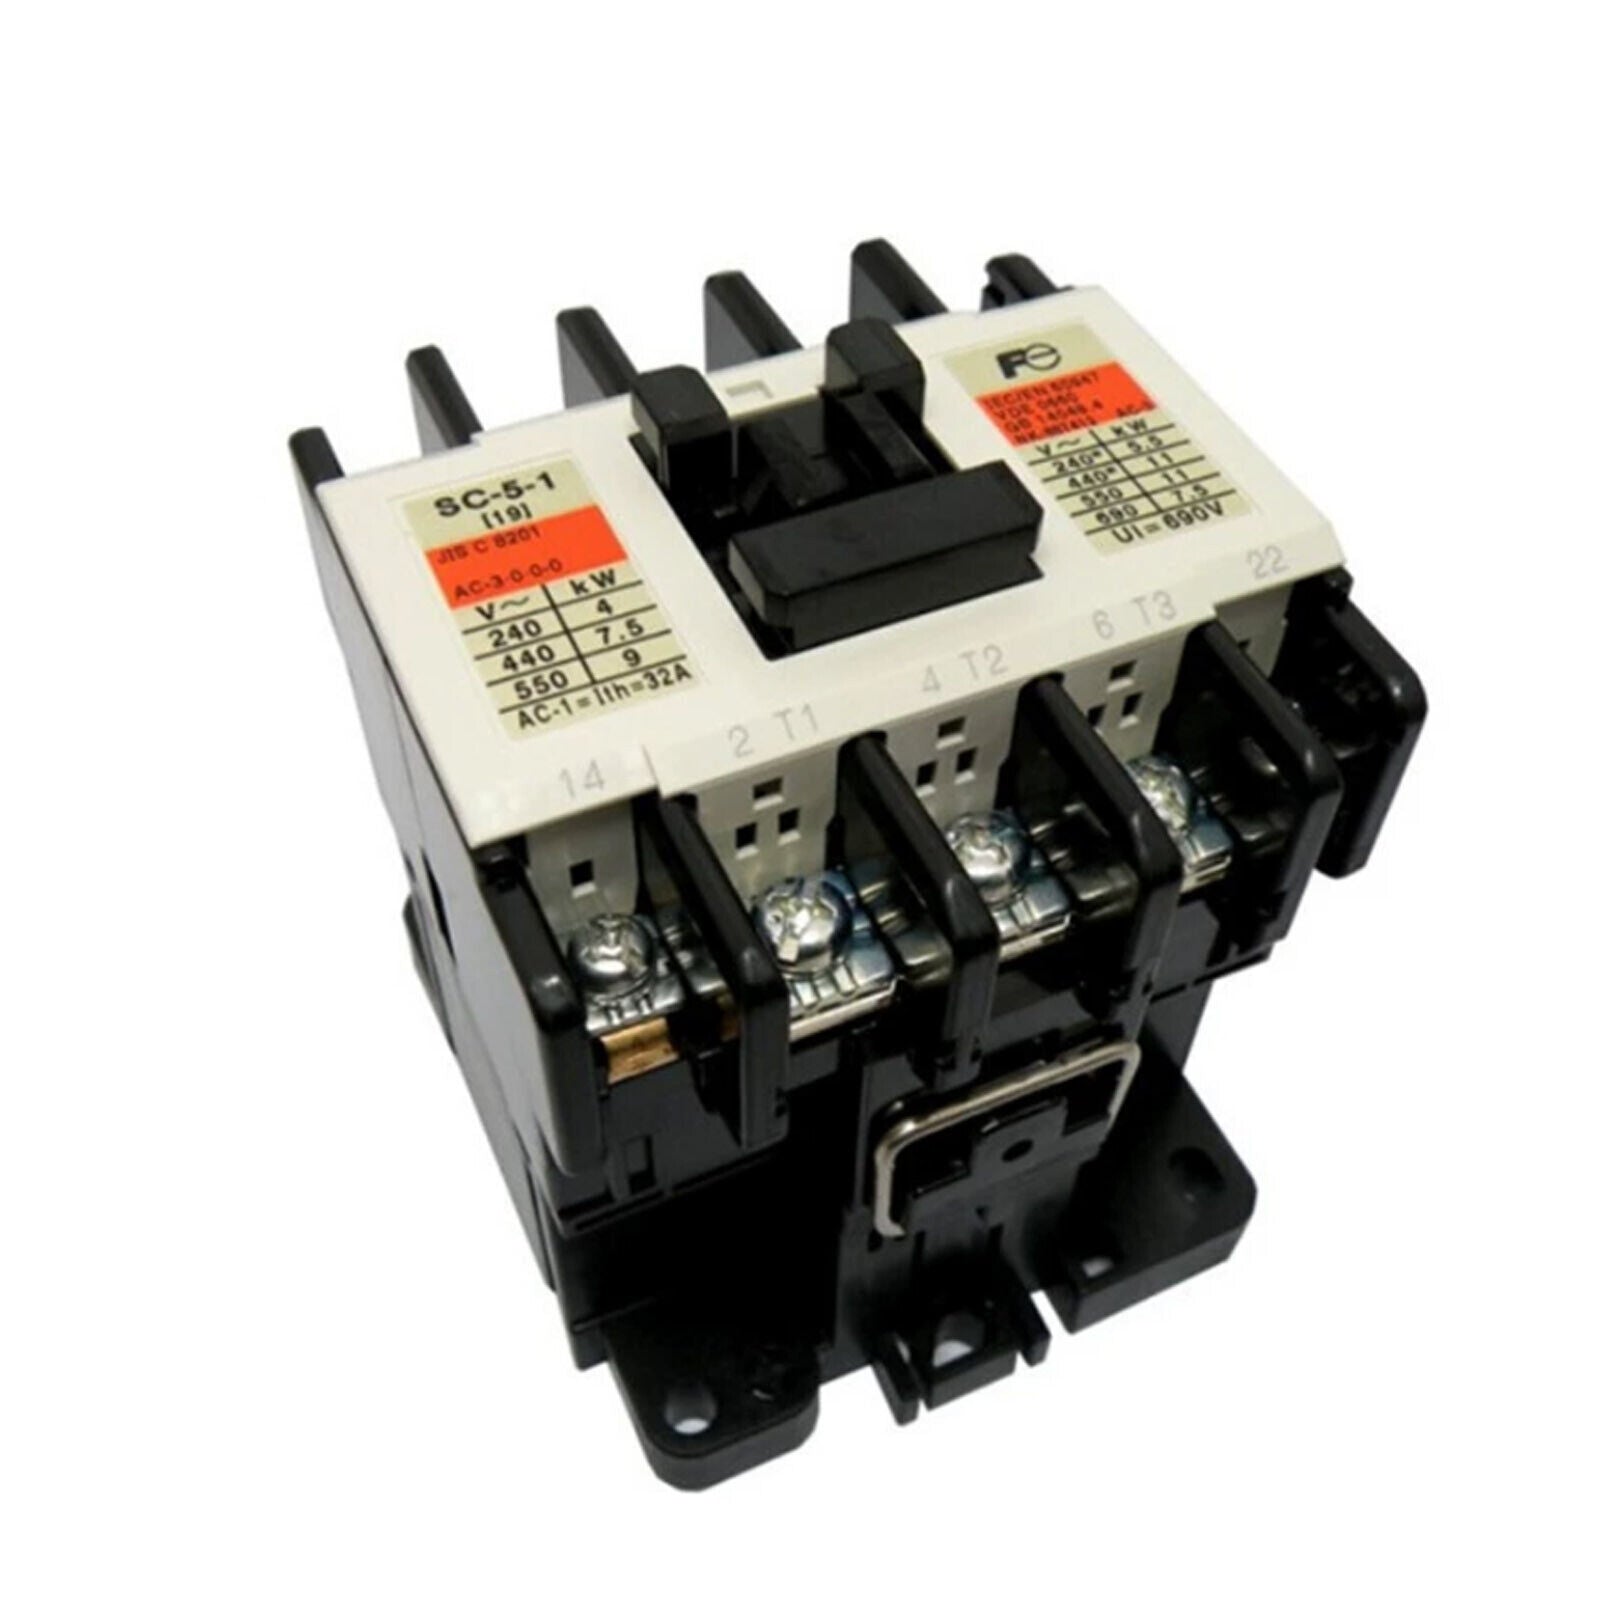 1PC  FOR FUJI SC-5-1 AC220V Contactor